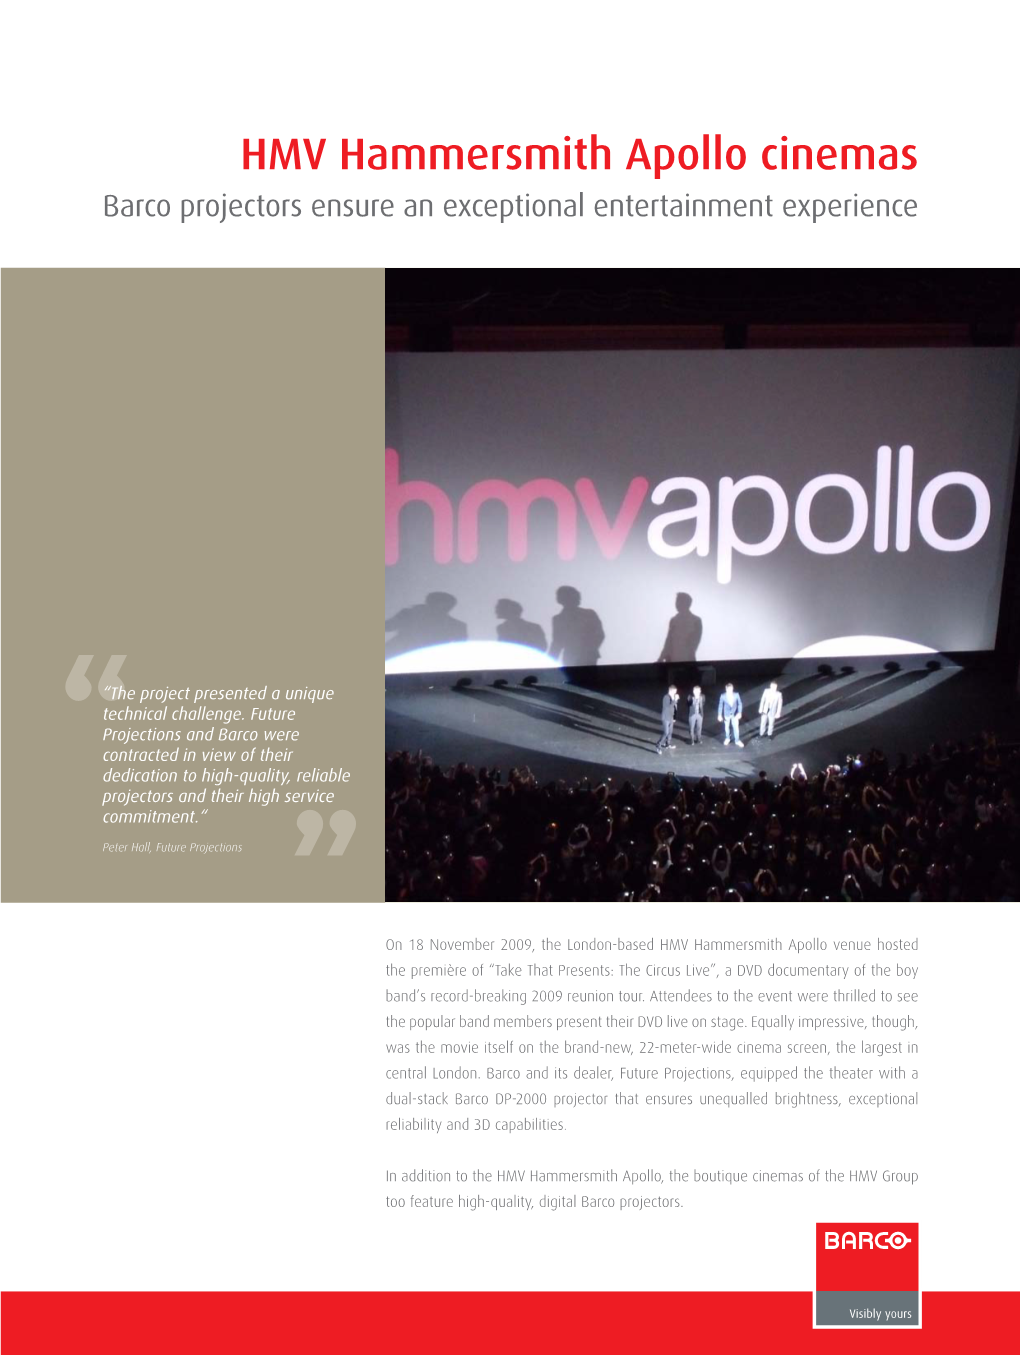 HMV Hammersmith Apollo Cinemas Barco Projectors Ensure an Exceptional Entertainment Experience